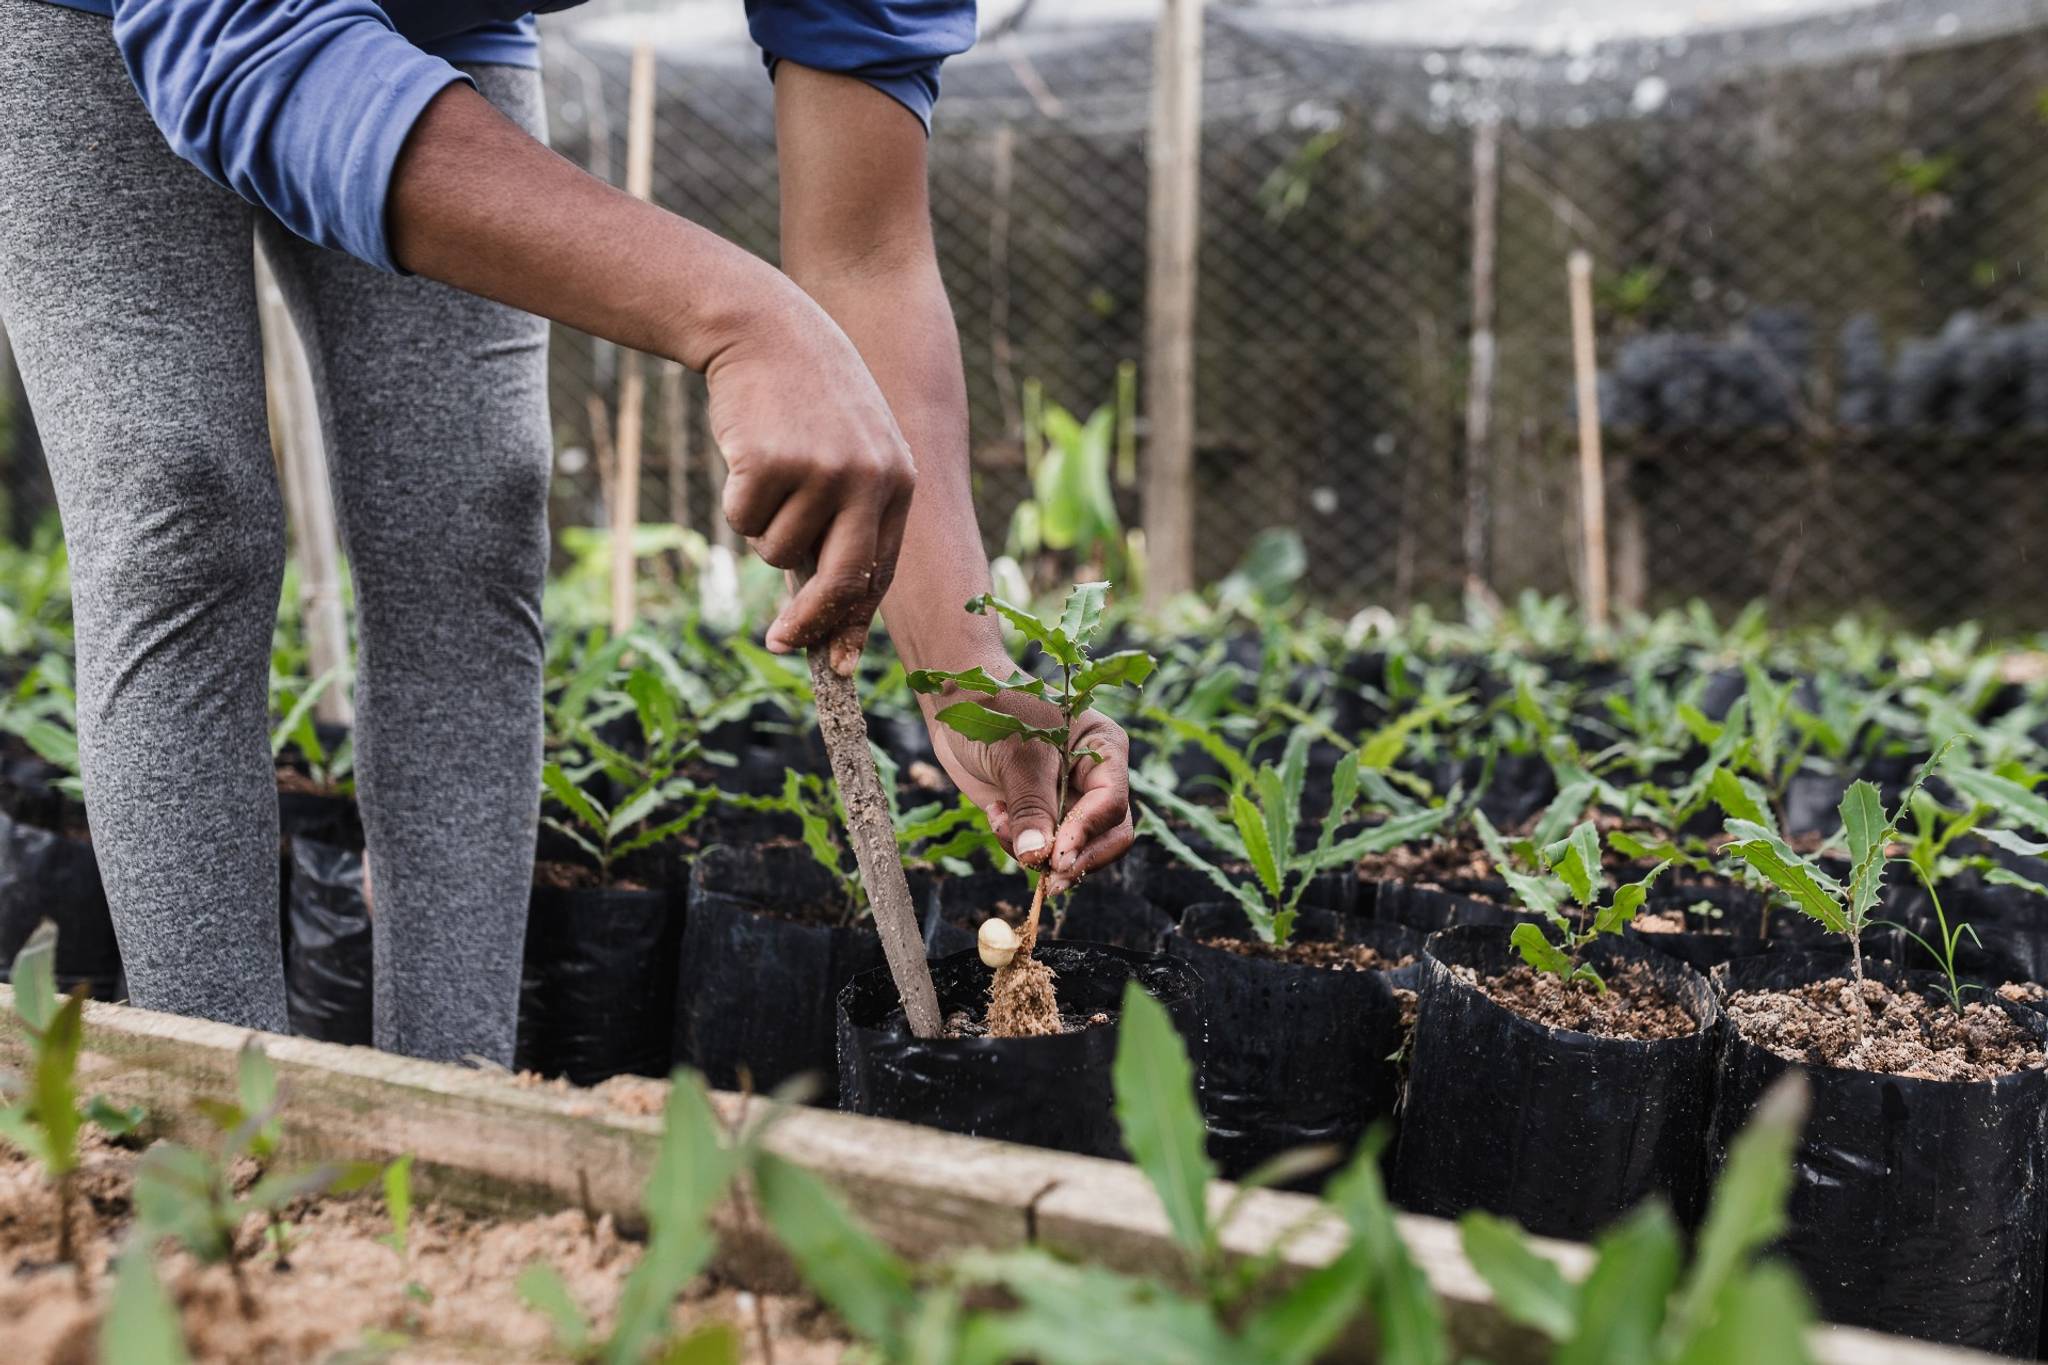 Digital marketplace Sproutl appeals to novice gardeners